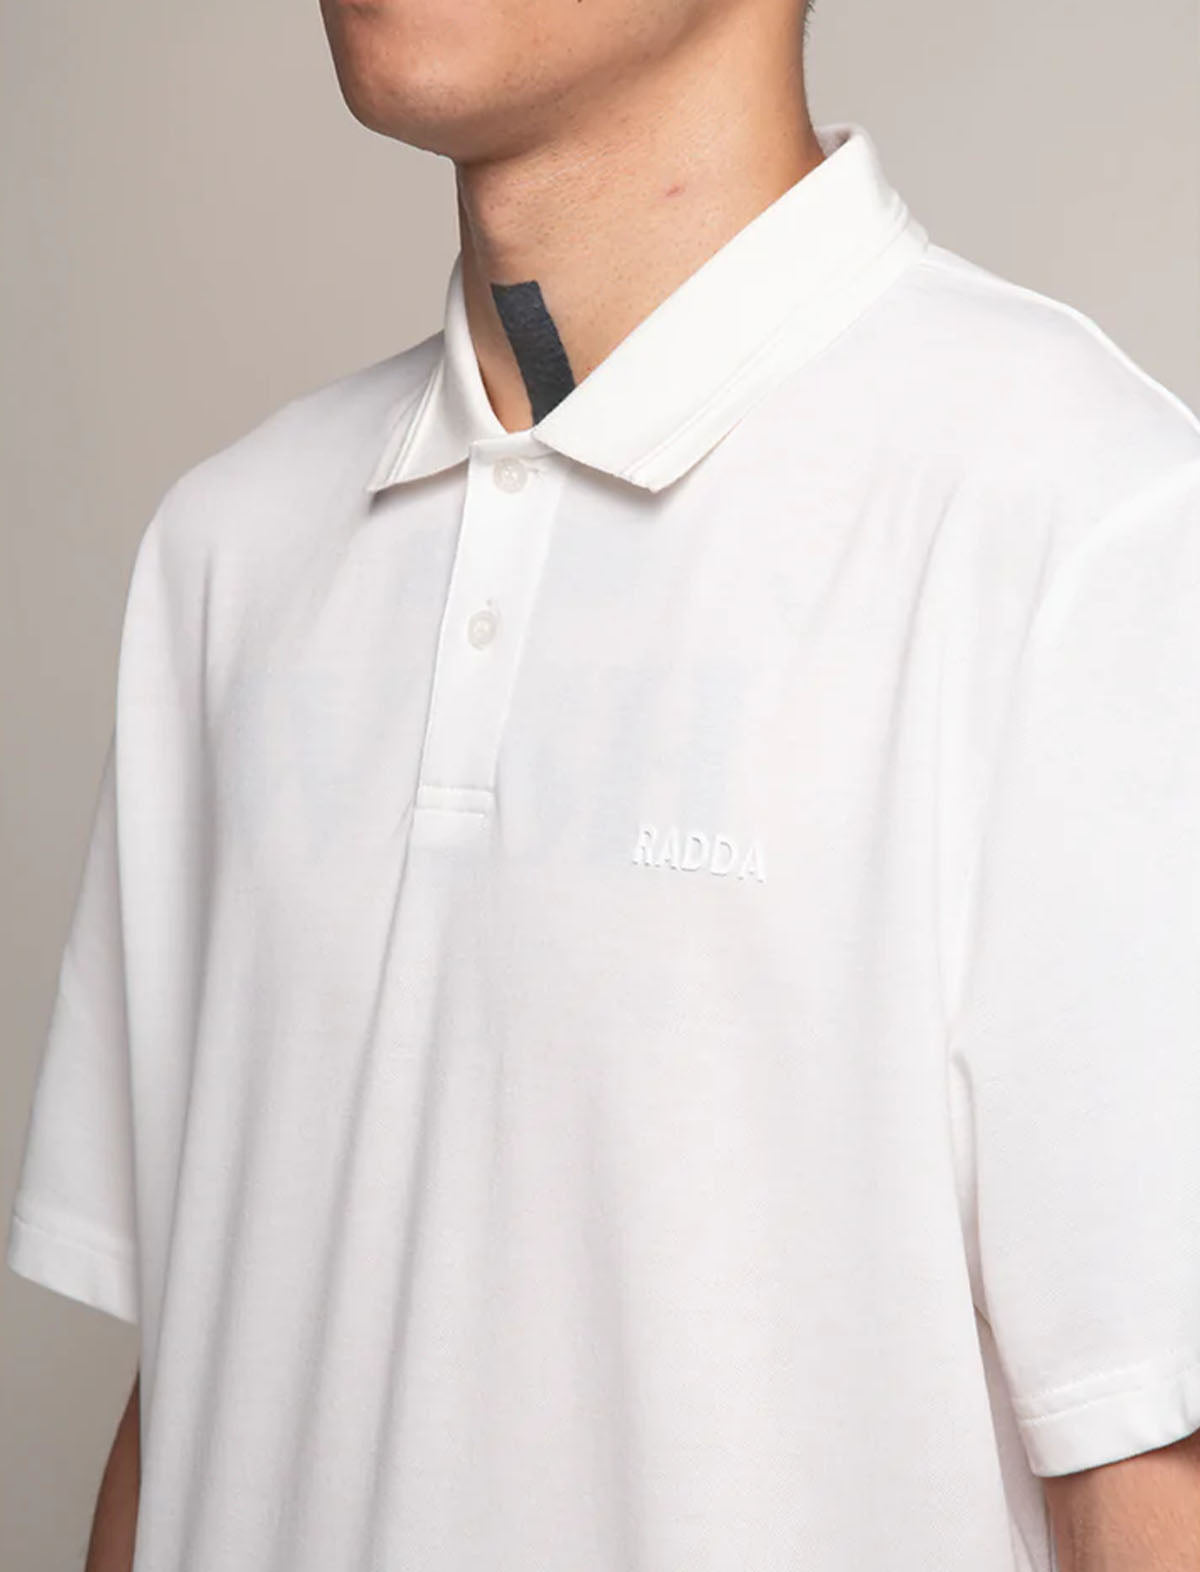 RADDA GOLF Hogan II Polo Shirt in White